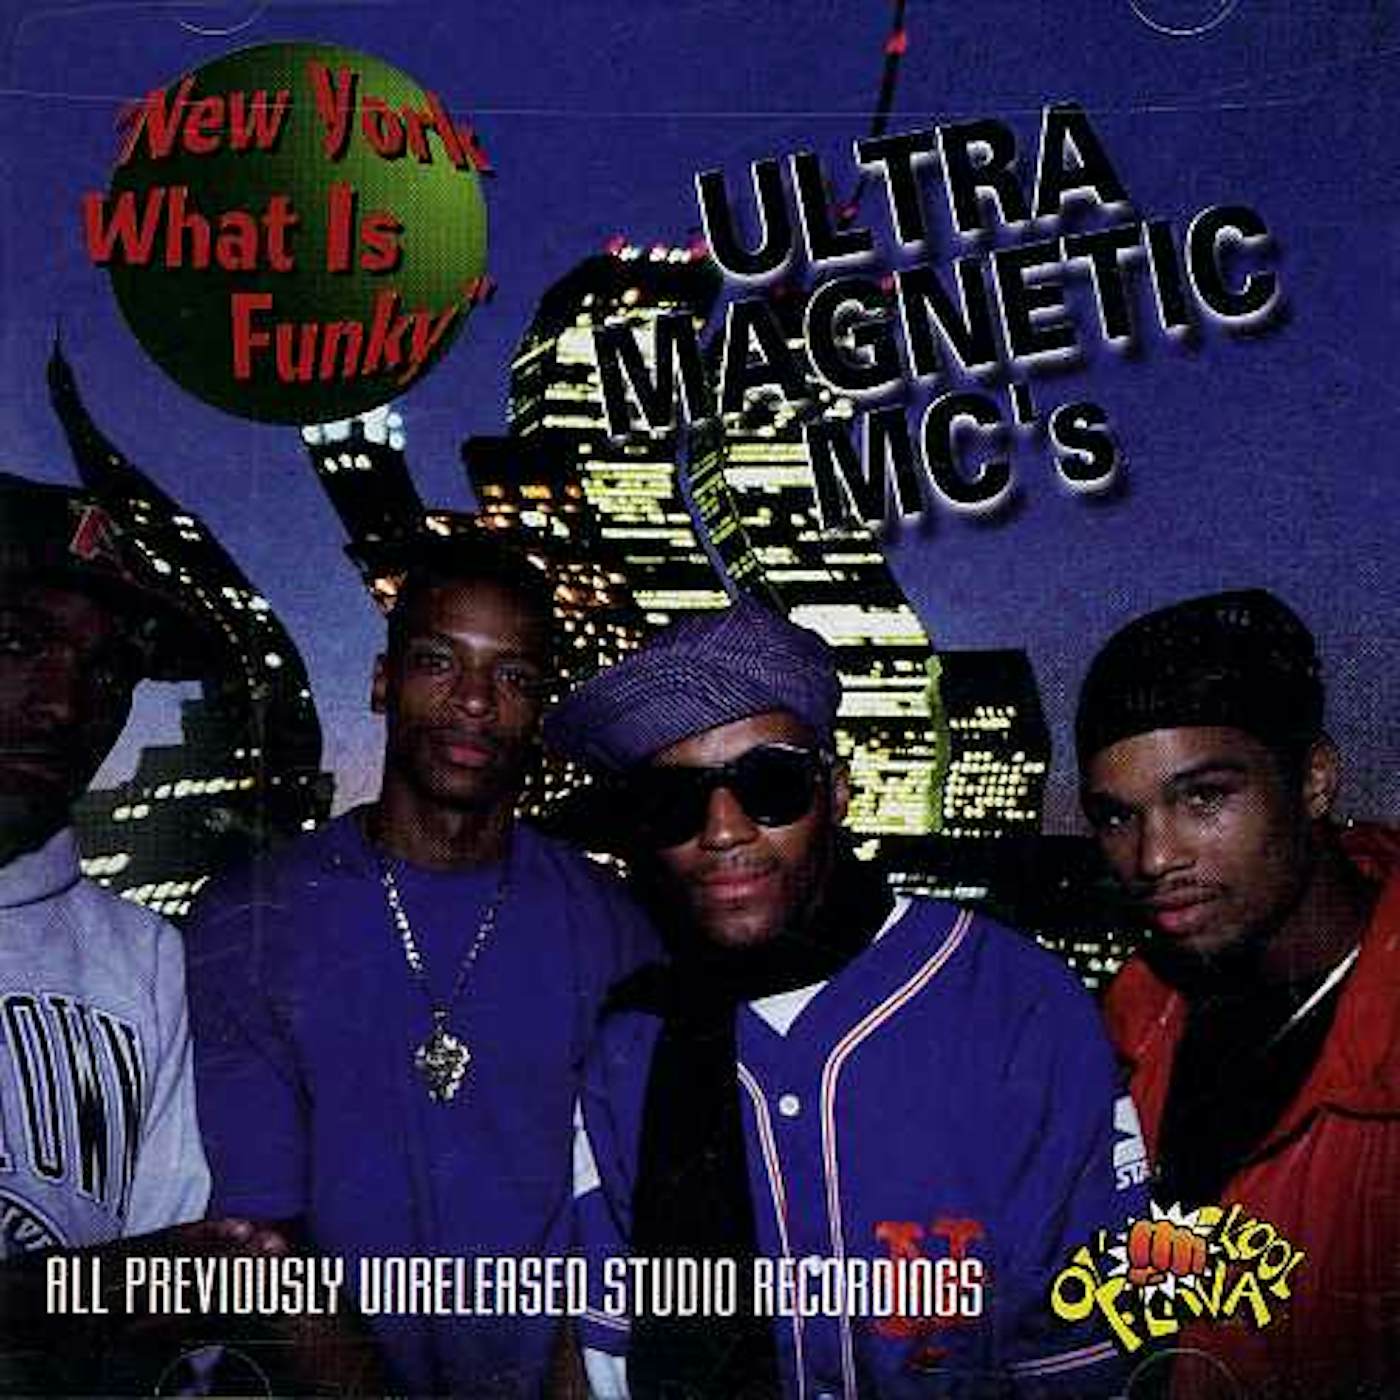 Ultramagnetic MC's NEW YORK WHAT IS FUNKY CD